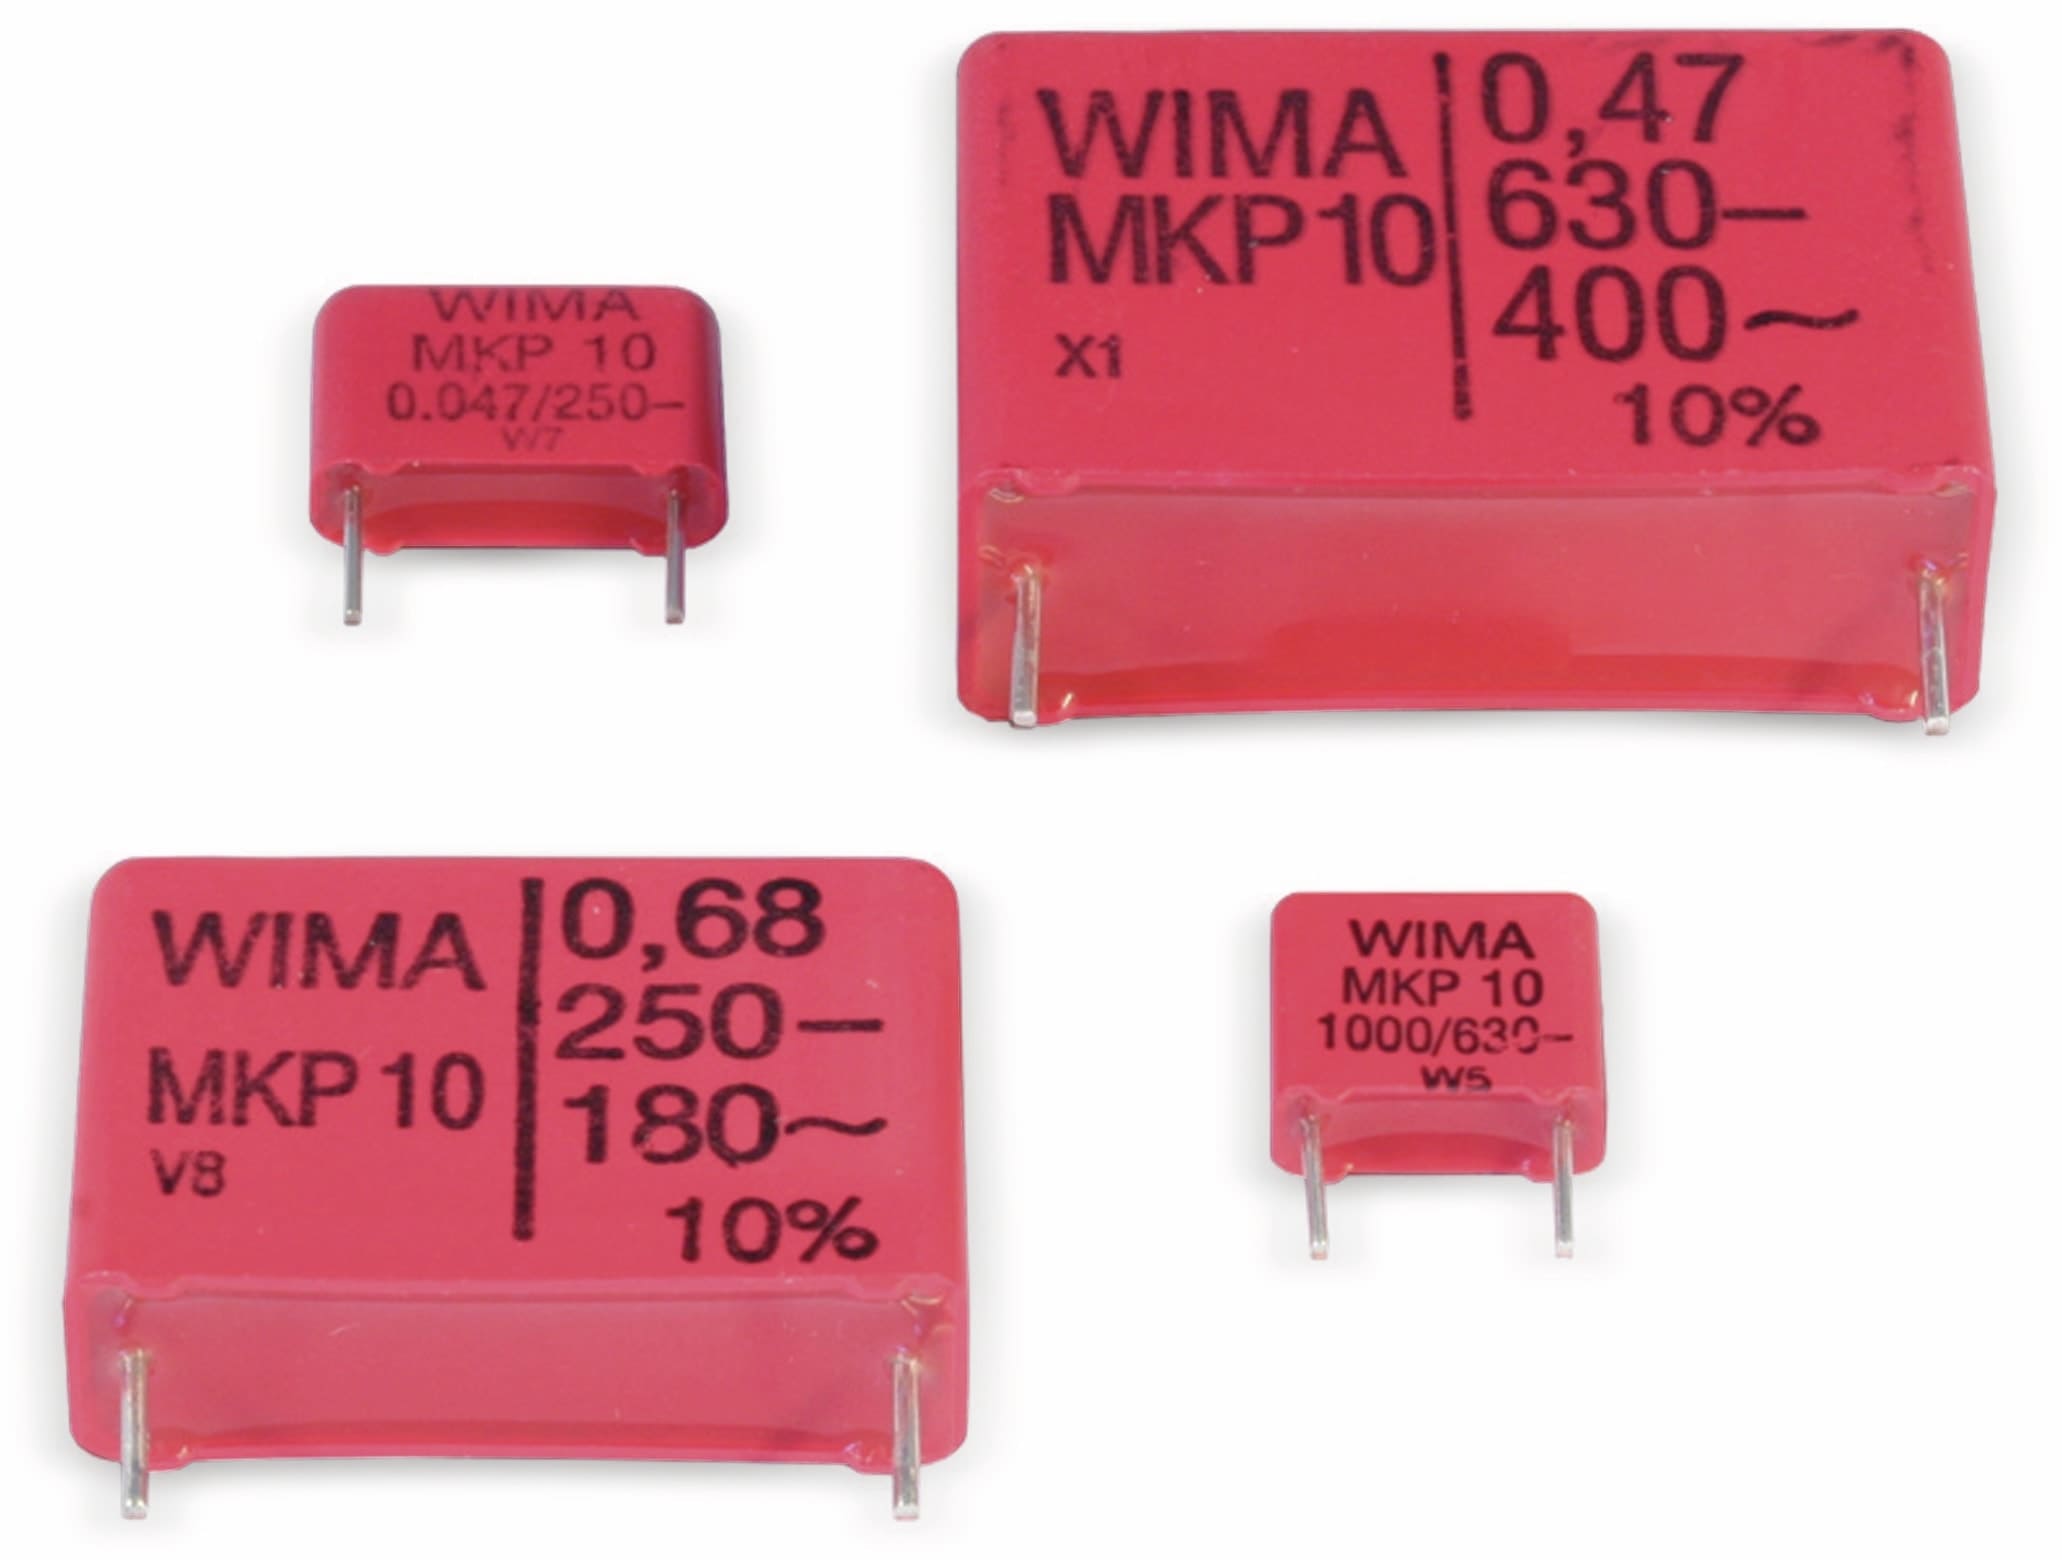 WIMA Folienkondensator, 10nF, 630V